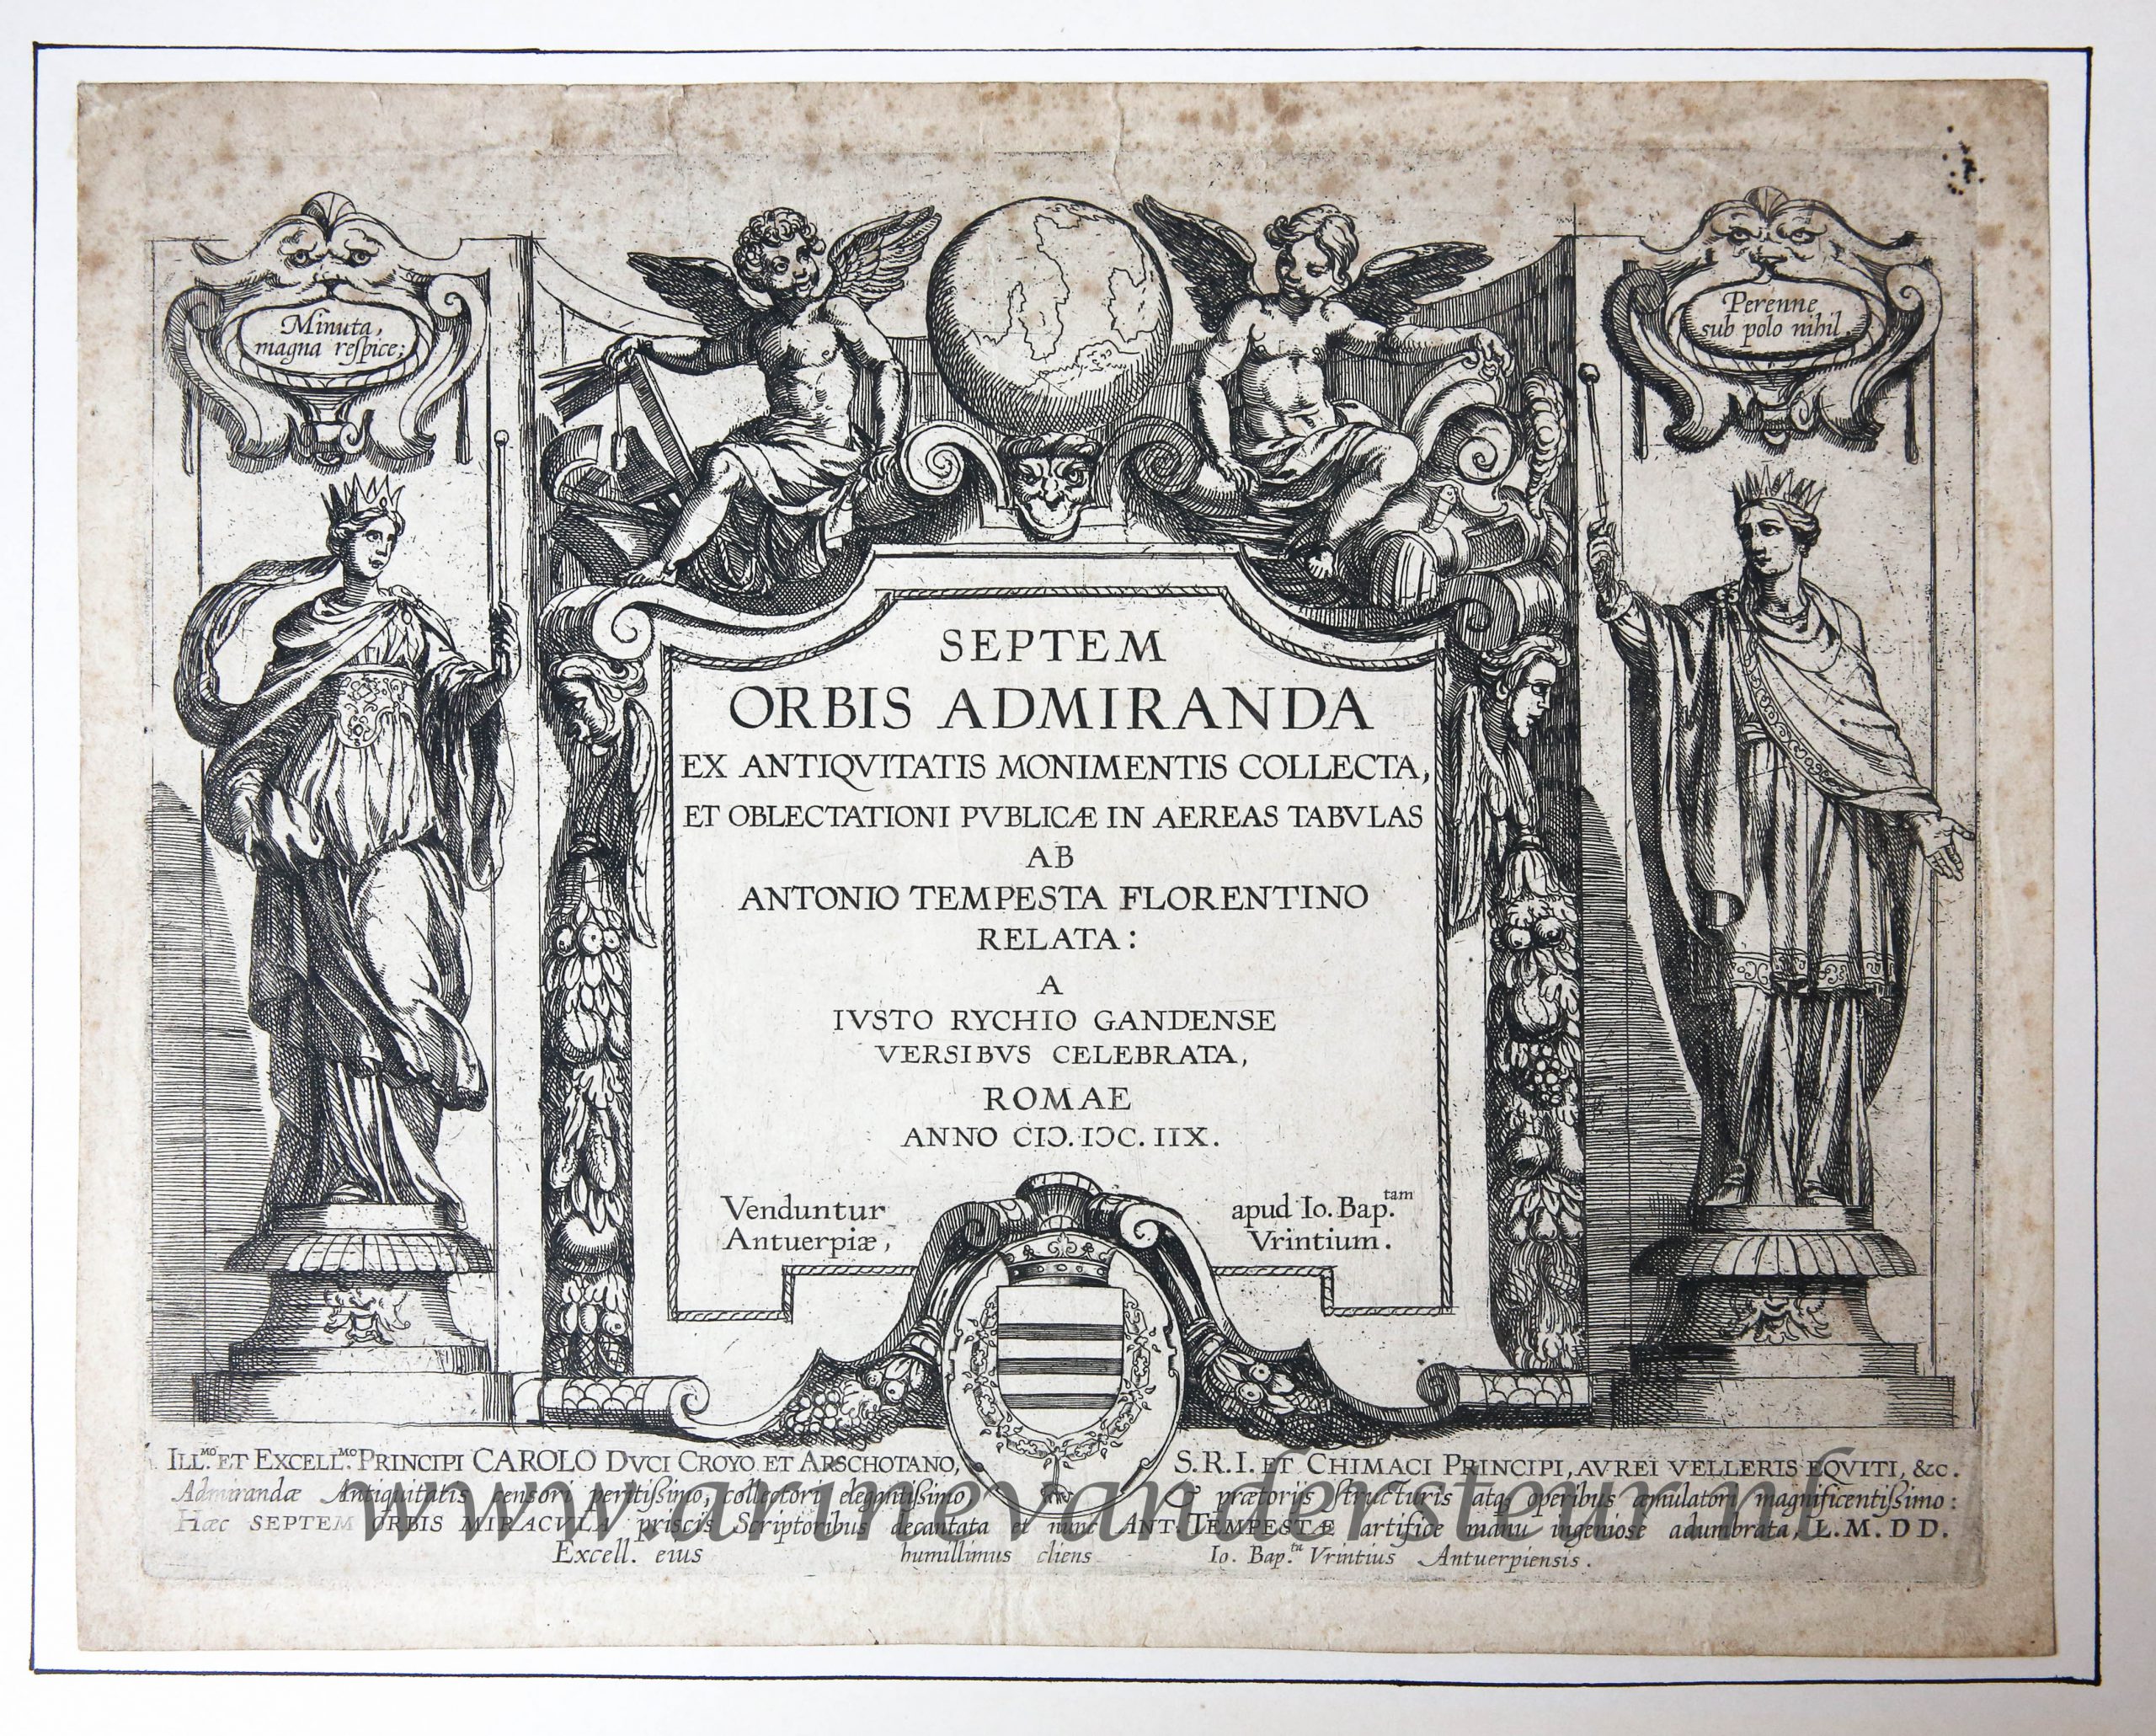 [Antique title page, 1608] The Seven Wonders of the World / De zeven wereldwonderen [Septem orbis admiranda], published 1608, 1 p.